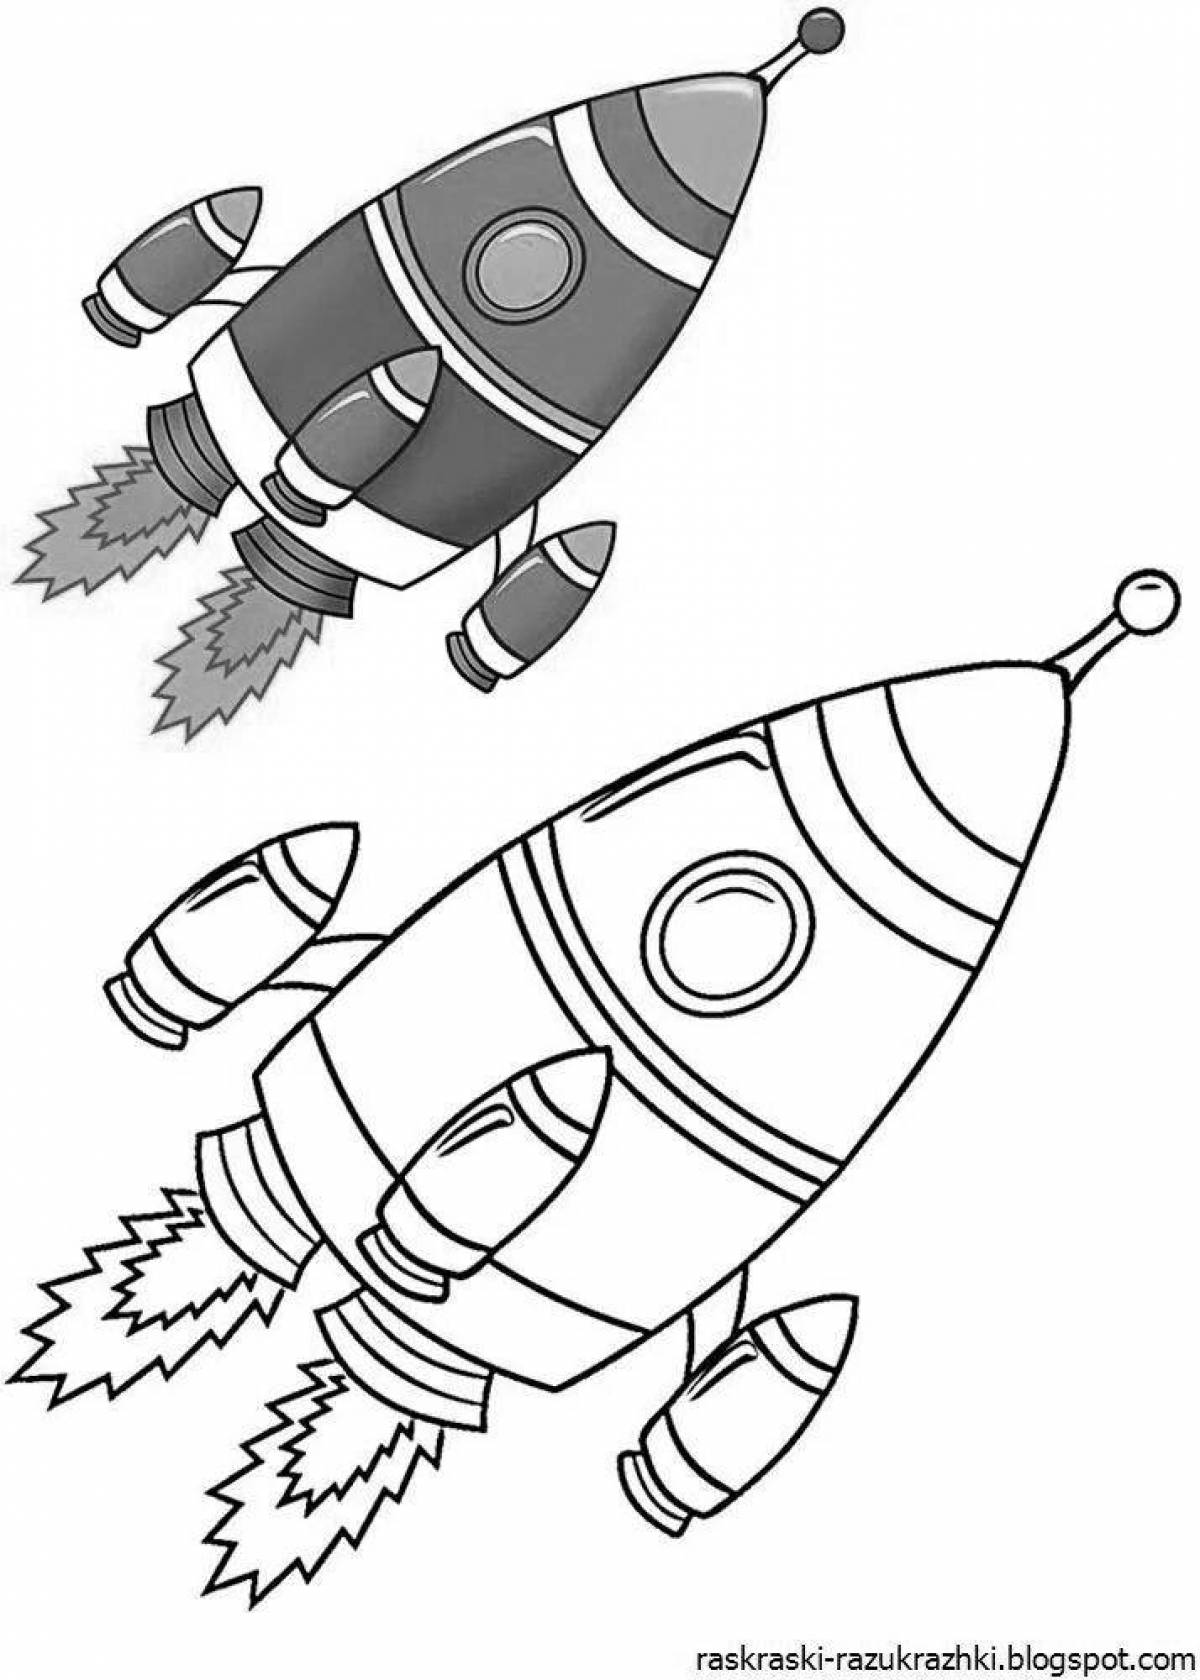 Fun rocket coloring for kids